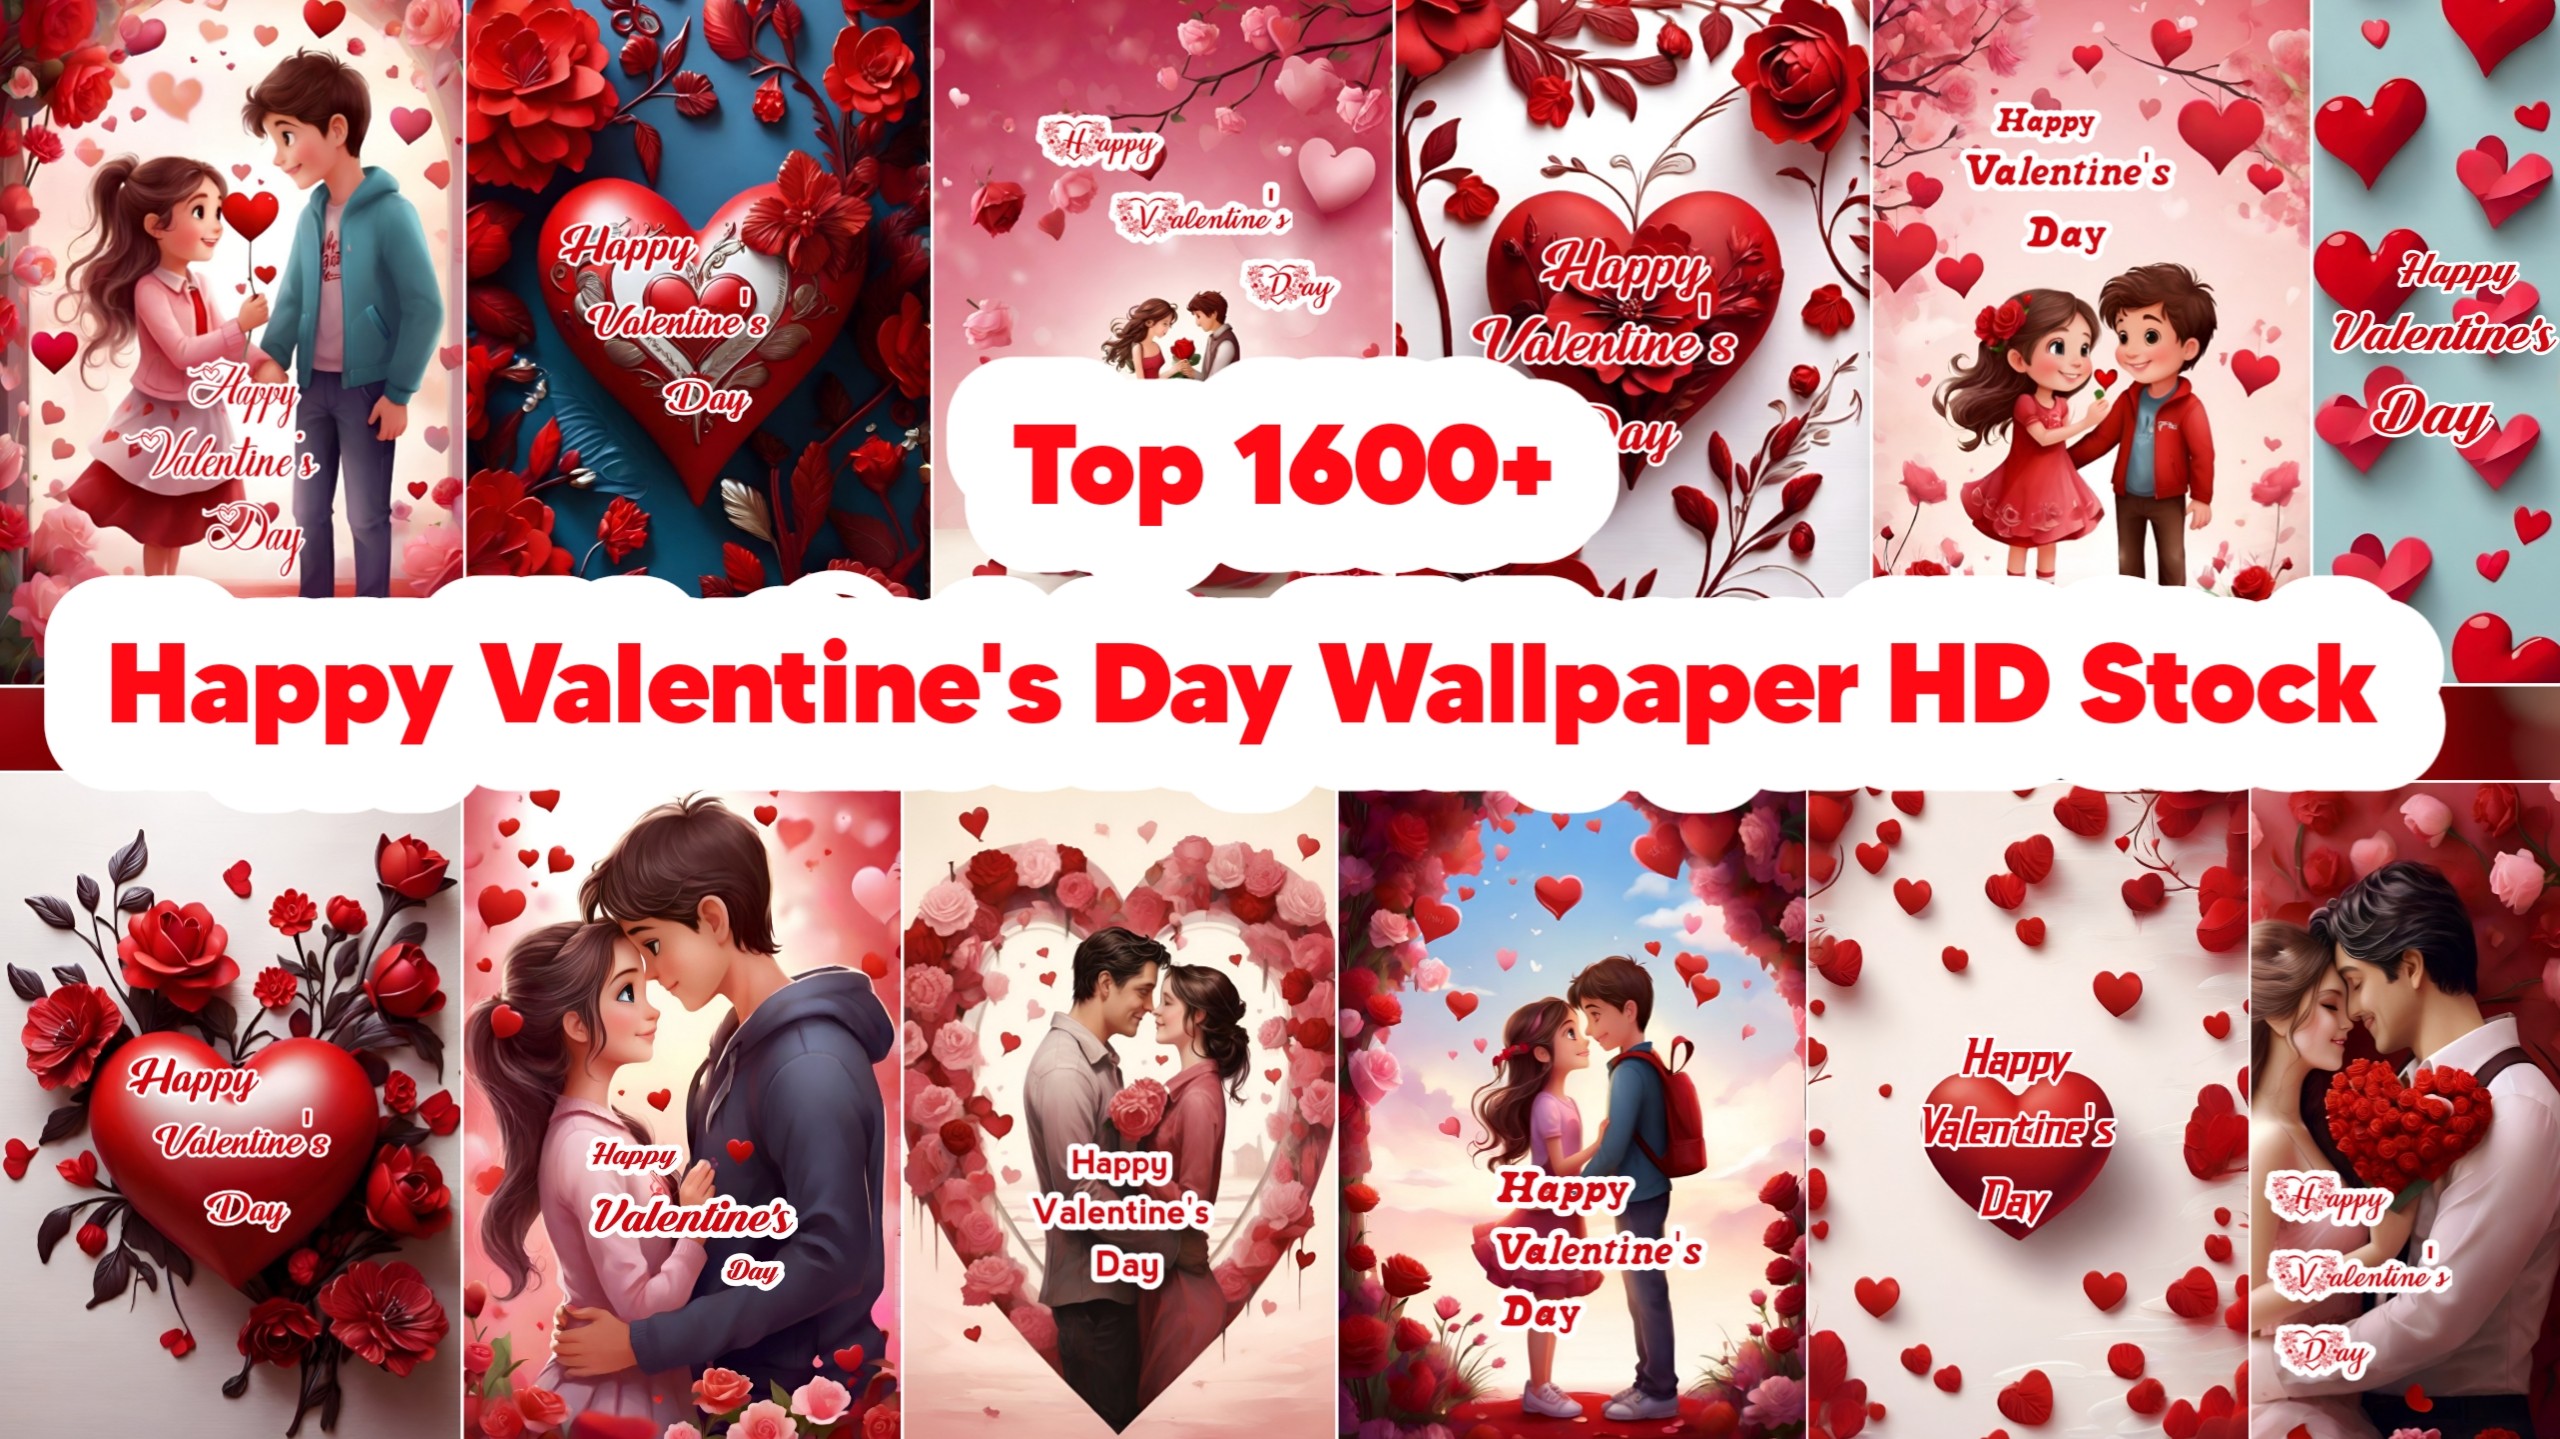 Top 1600+ Valentine's Day wallpaper HD Stock